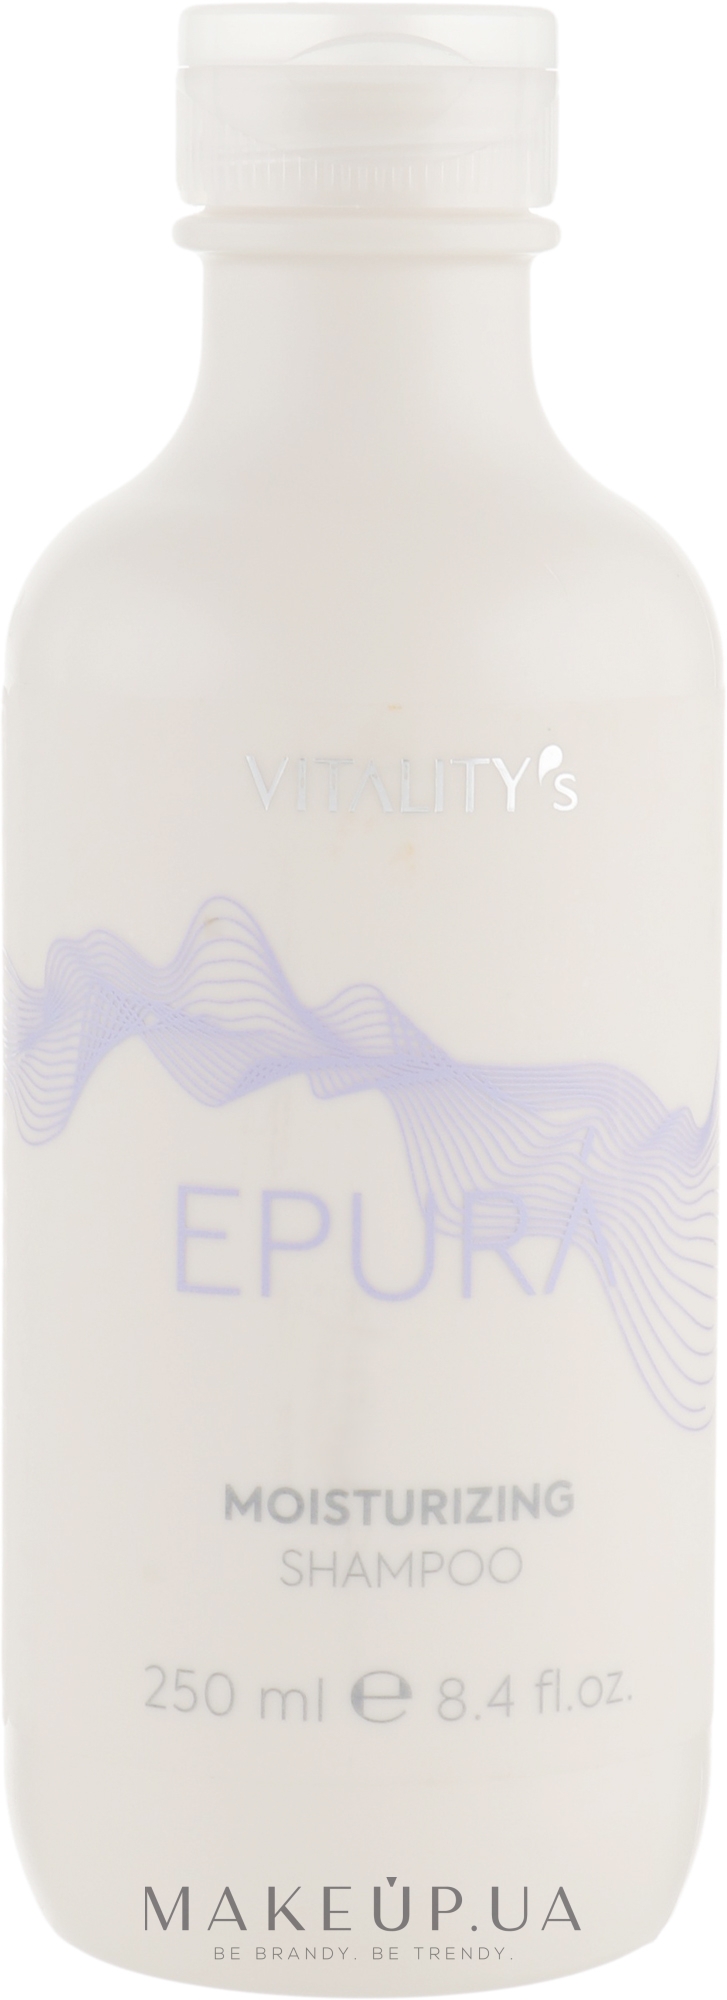 Шампунь увлажняющий - Vitality's Epura Moisturizing Shampoo — фото 250ml